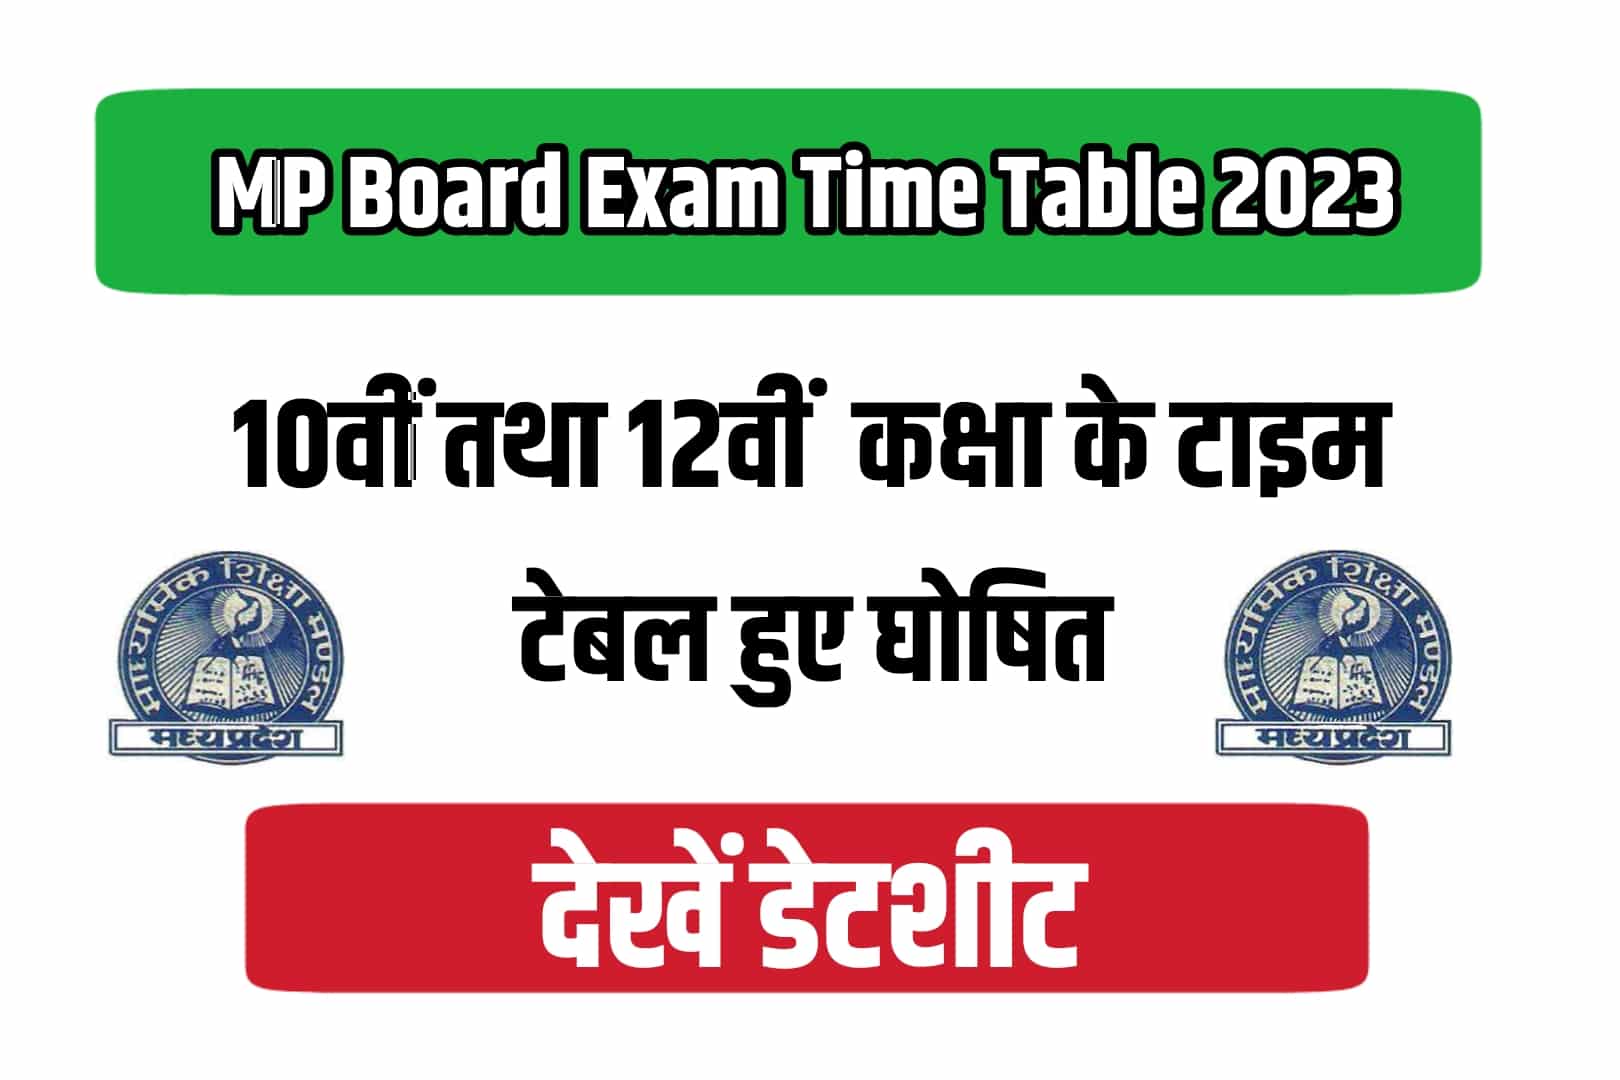 MP Board 10th and 12th Exam Time Table 2023 | मध्यप्रदेश बोर्ड डेट शीट